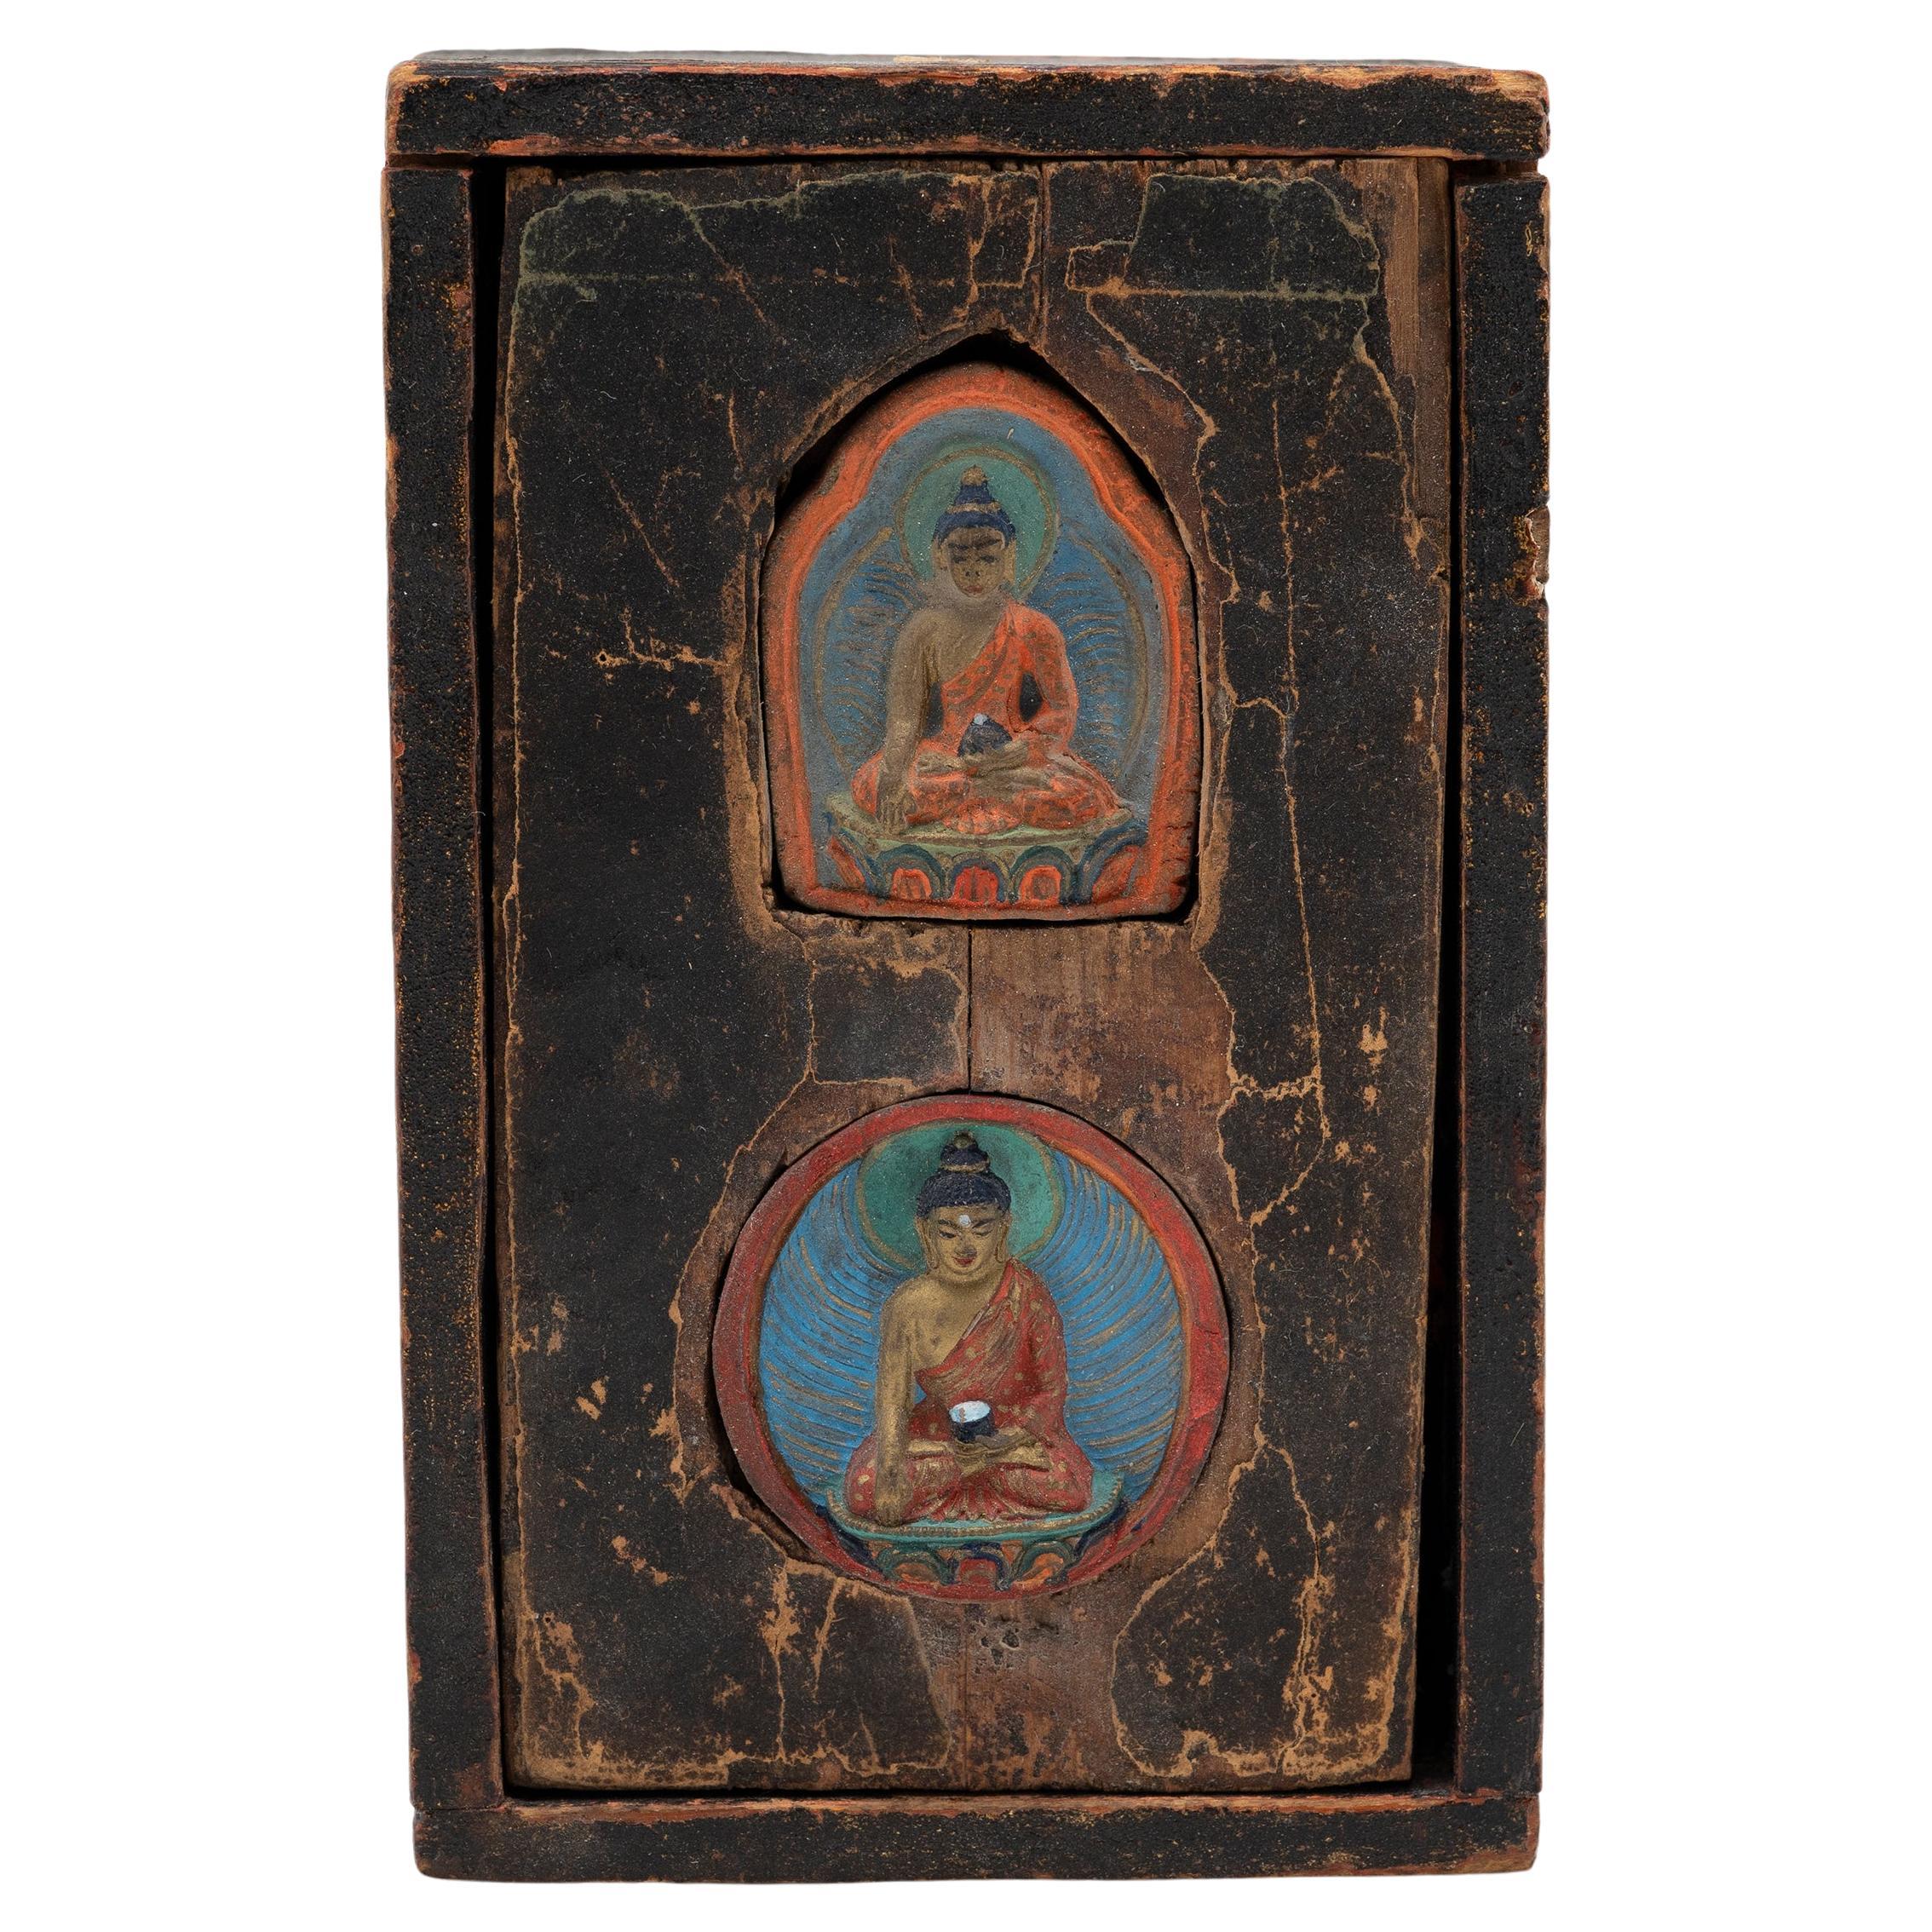 Tibetan Shrine Box with Chenresi Tsakli, c. 1850